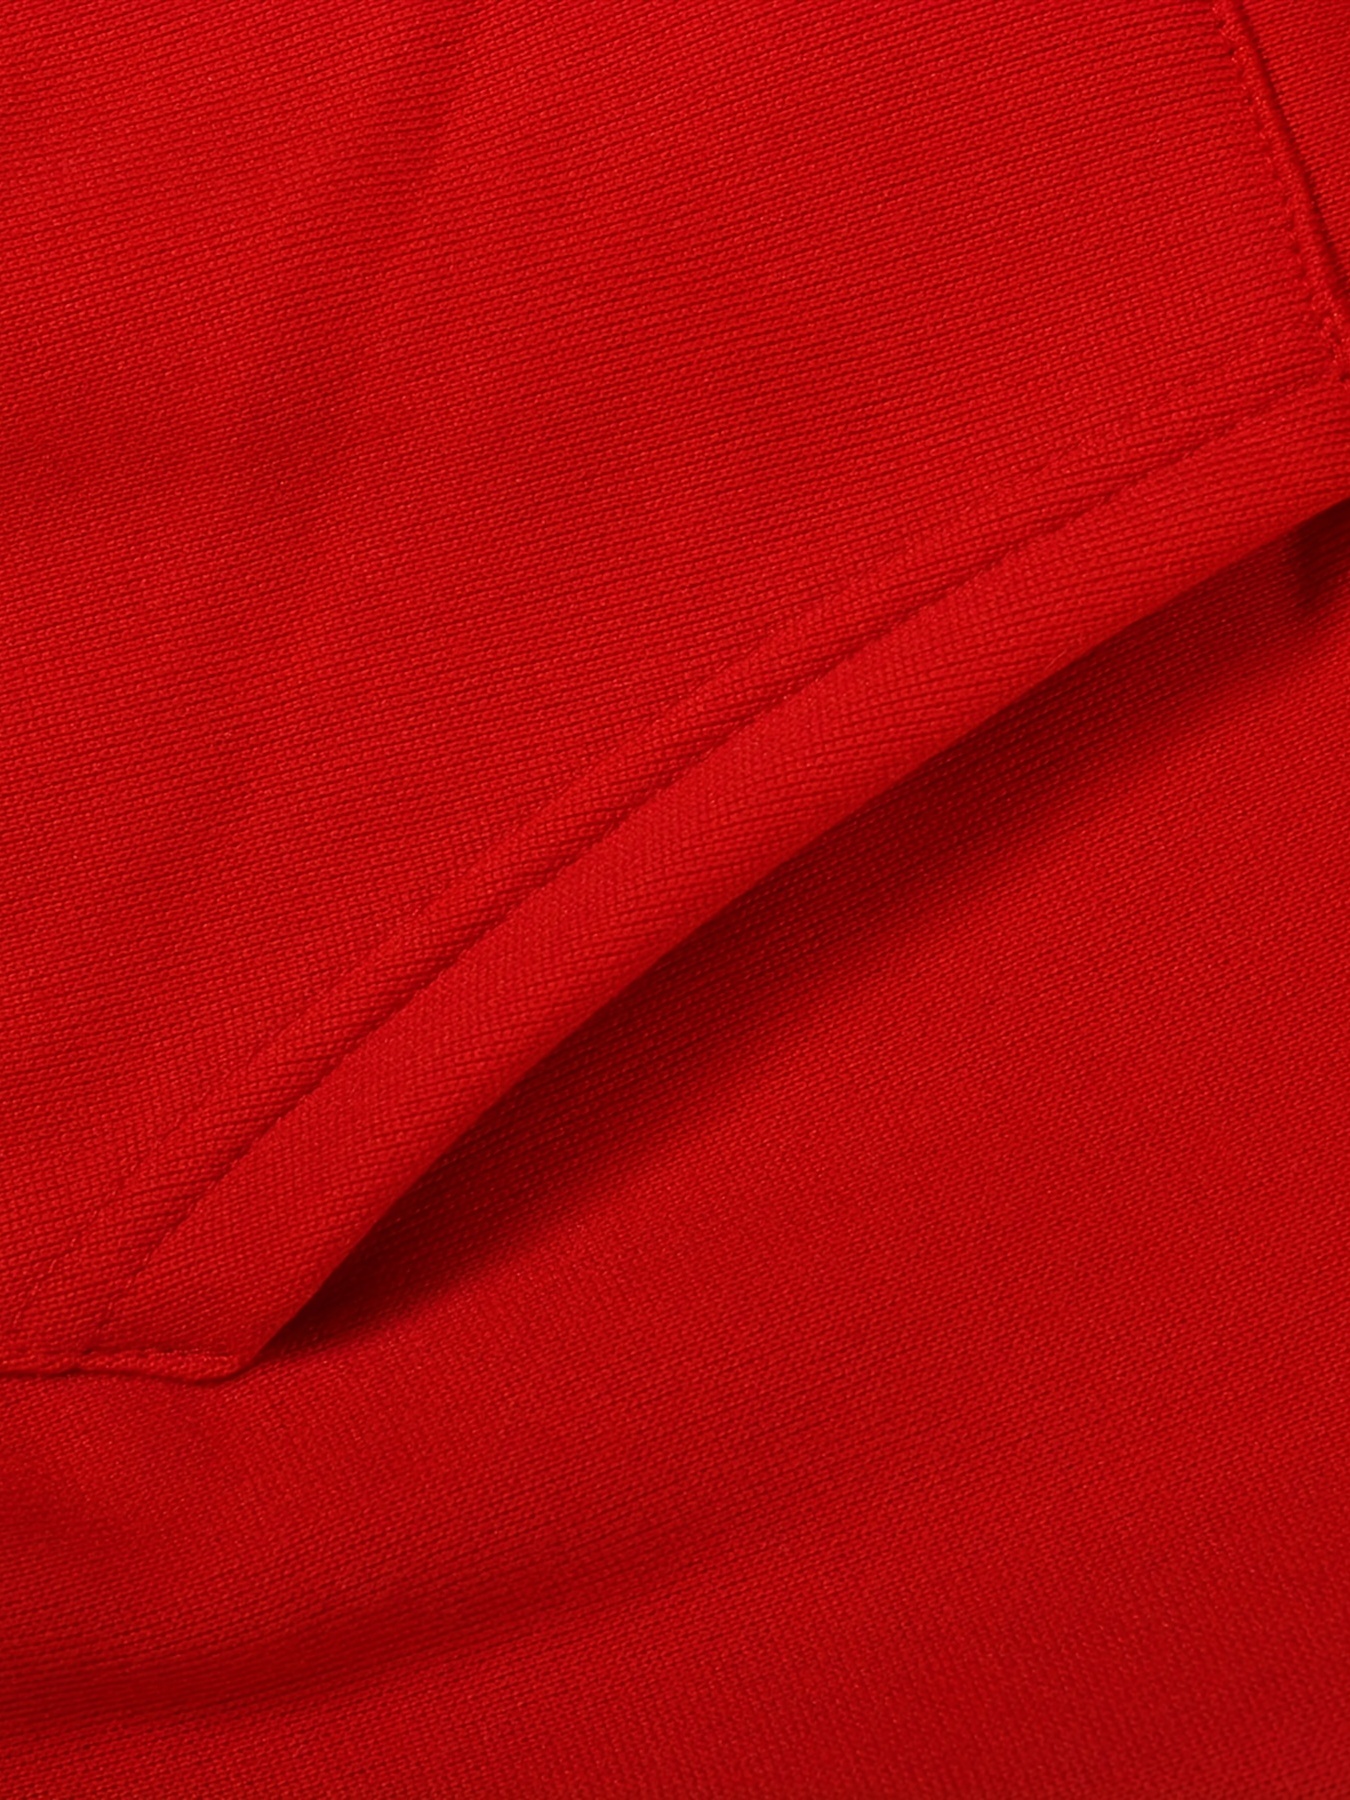 Zip up Loose Hooded Sports Sweatshirts,letter Graphic Y2k Style Long Sleeve  Top Solid Color Hoodie Jacket,women's Sporty Sweatshirts 